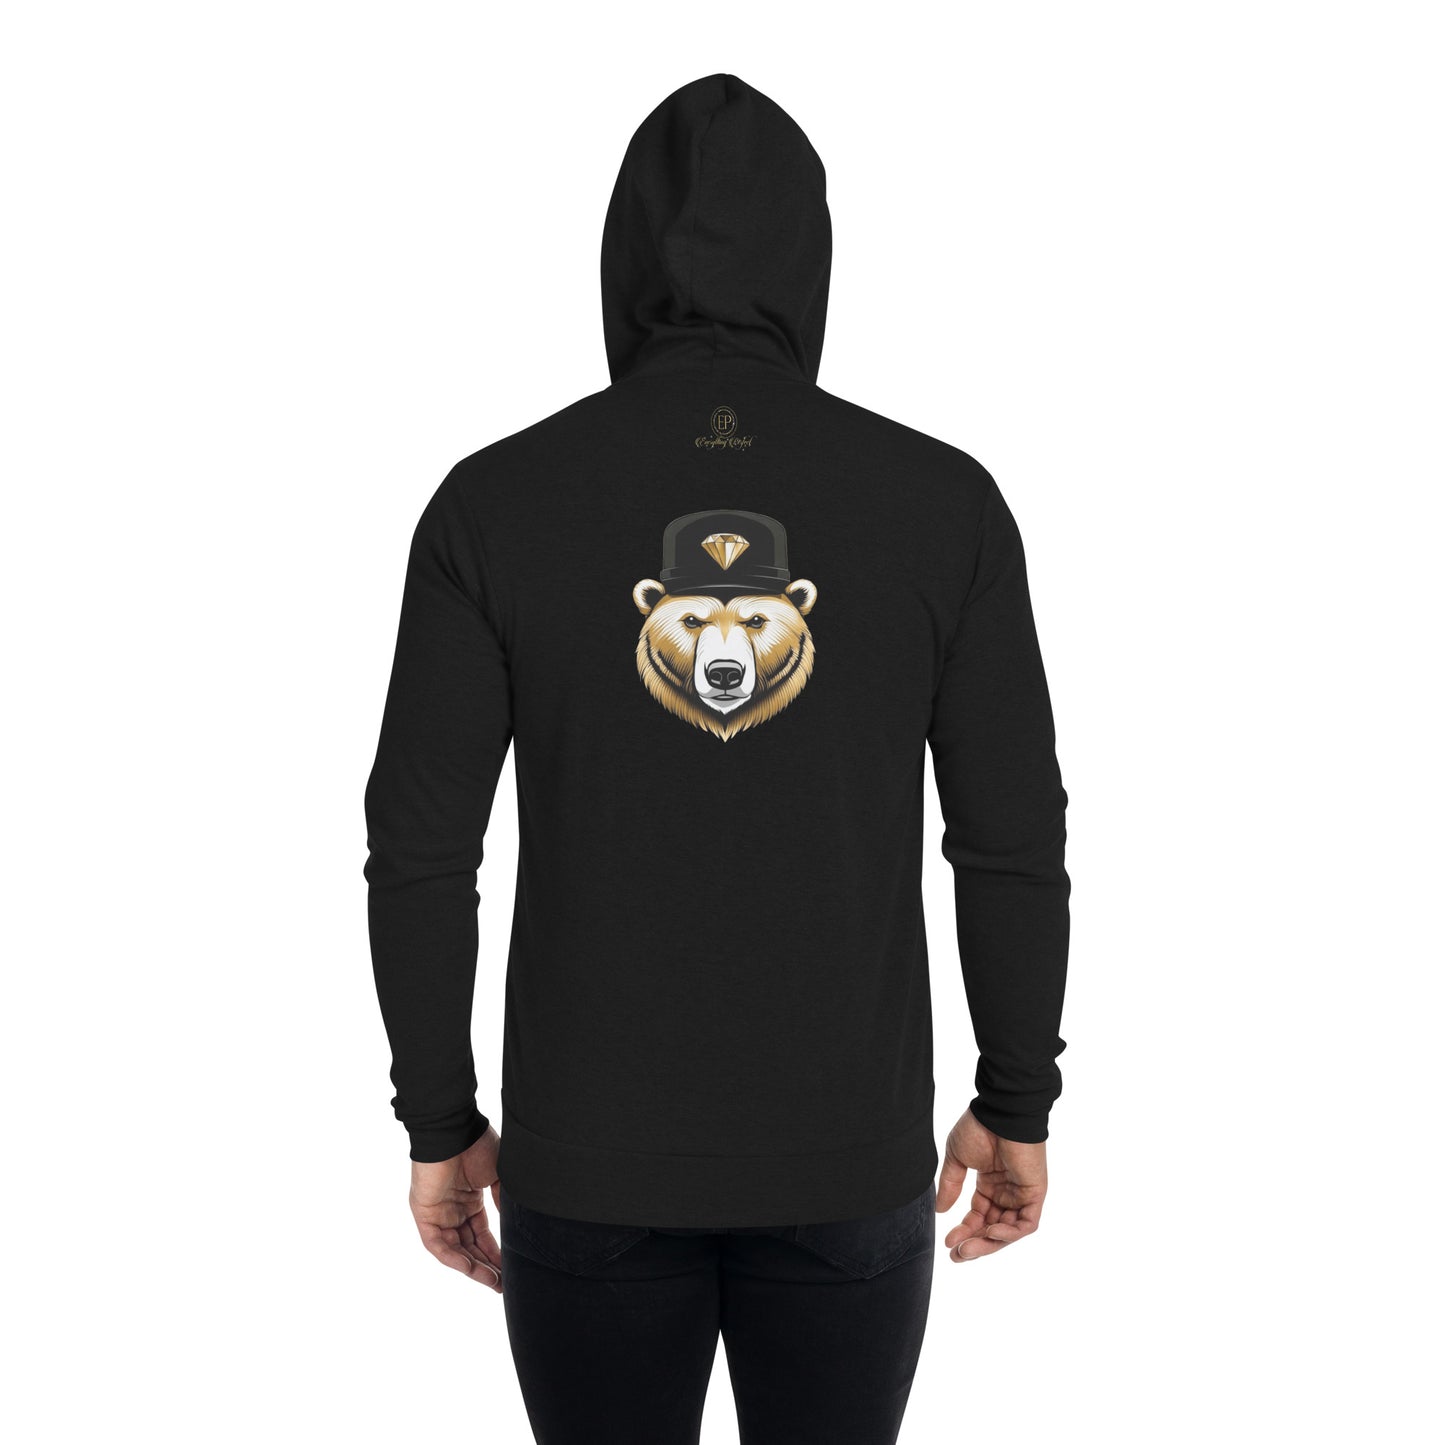 Diamond designed bear zip hoodie